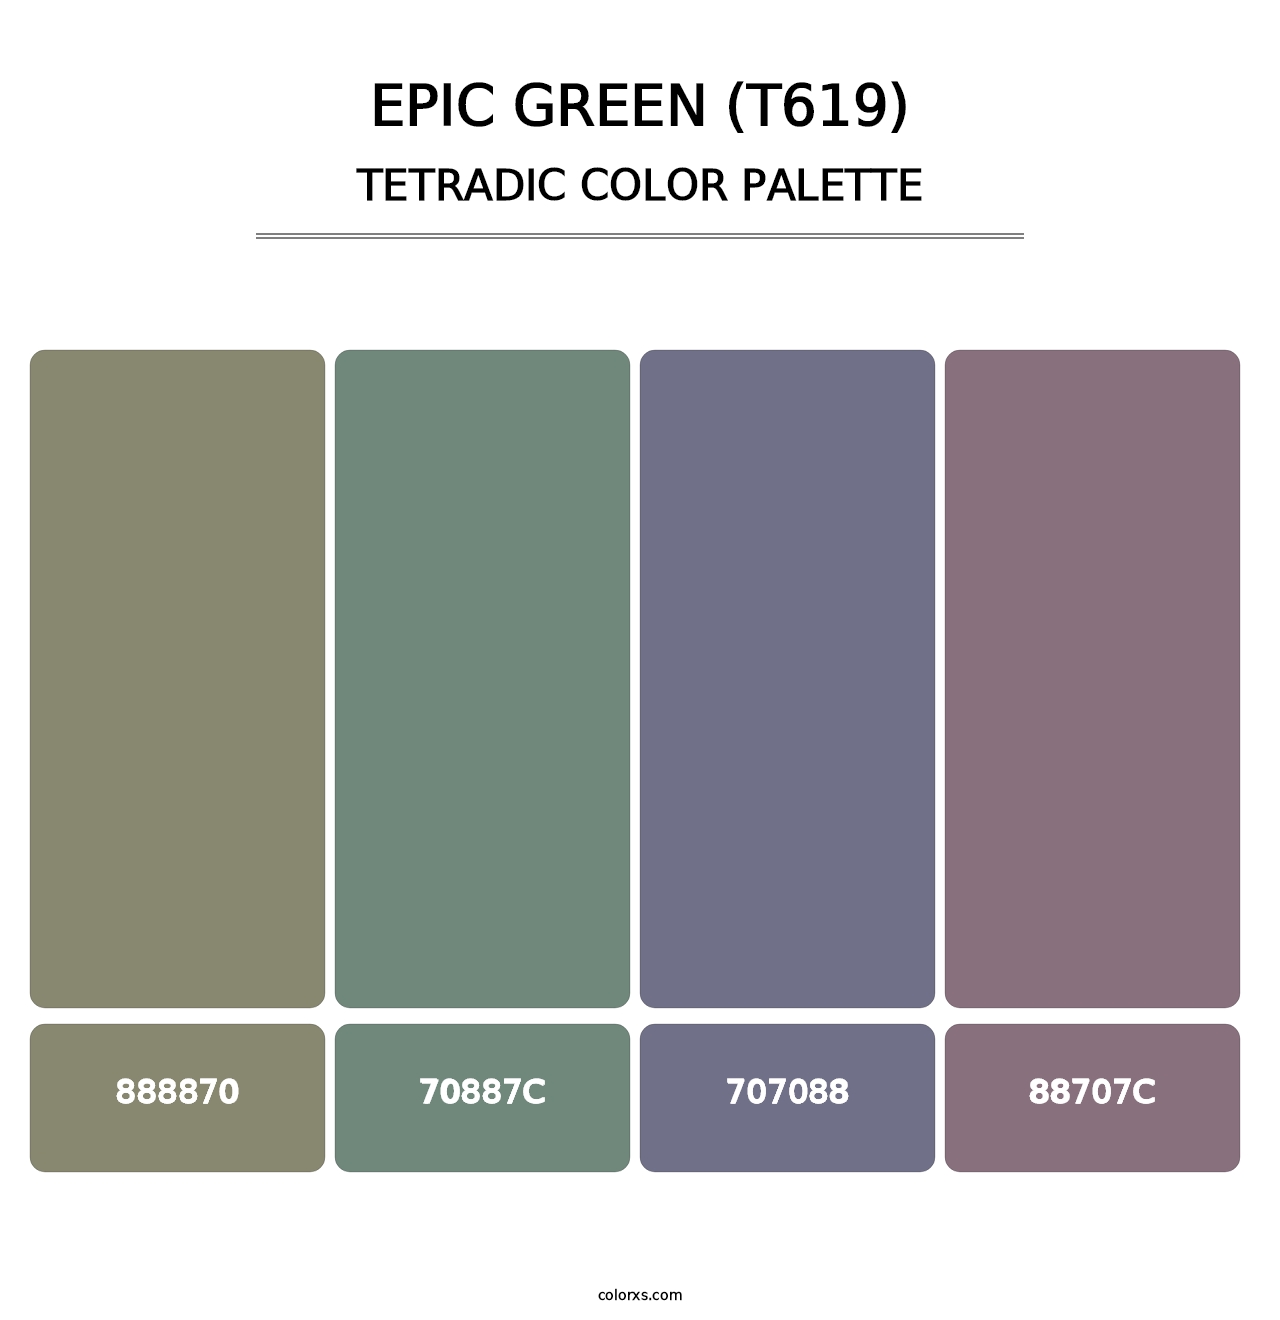 Epic Green (T619) - Tetradic Color Palette